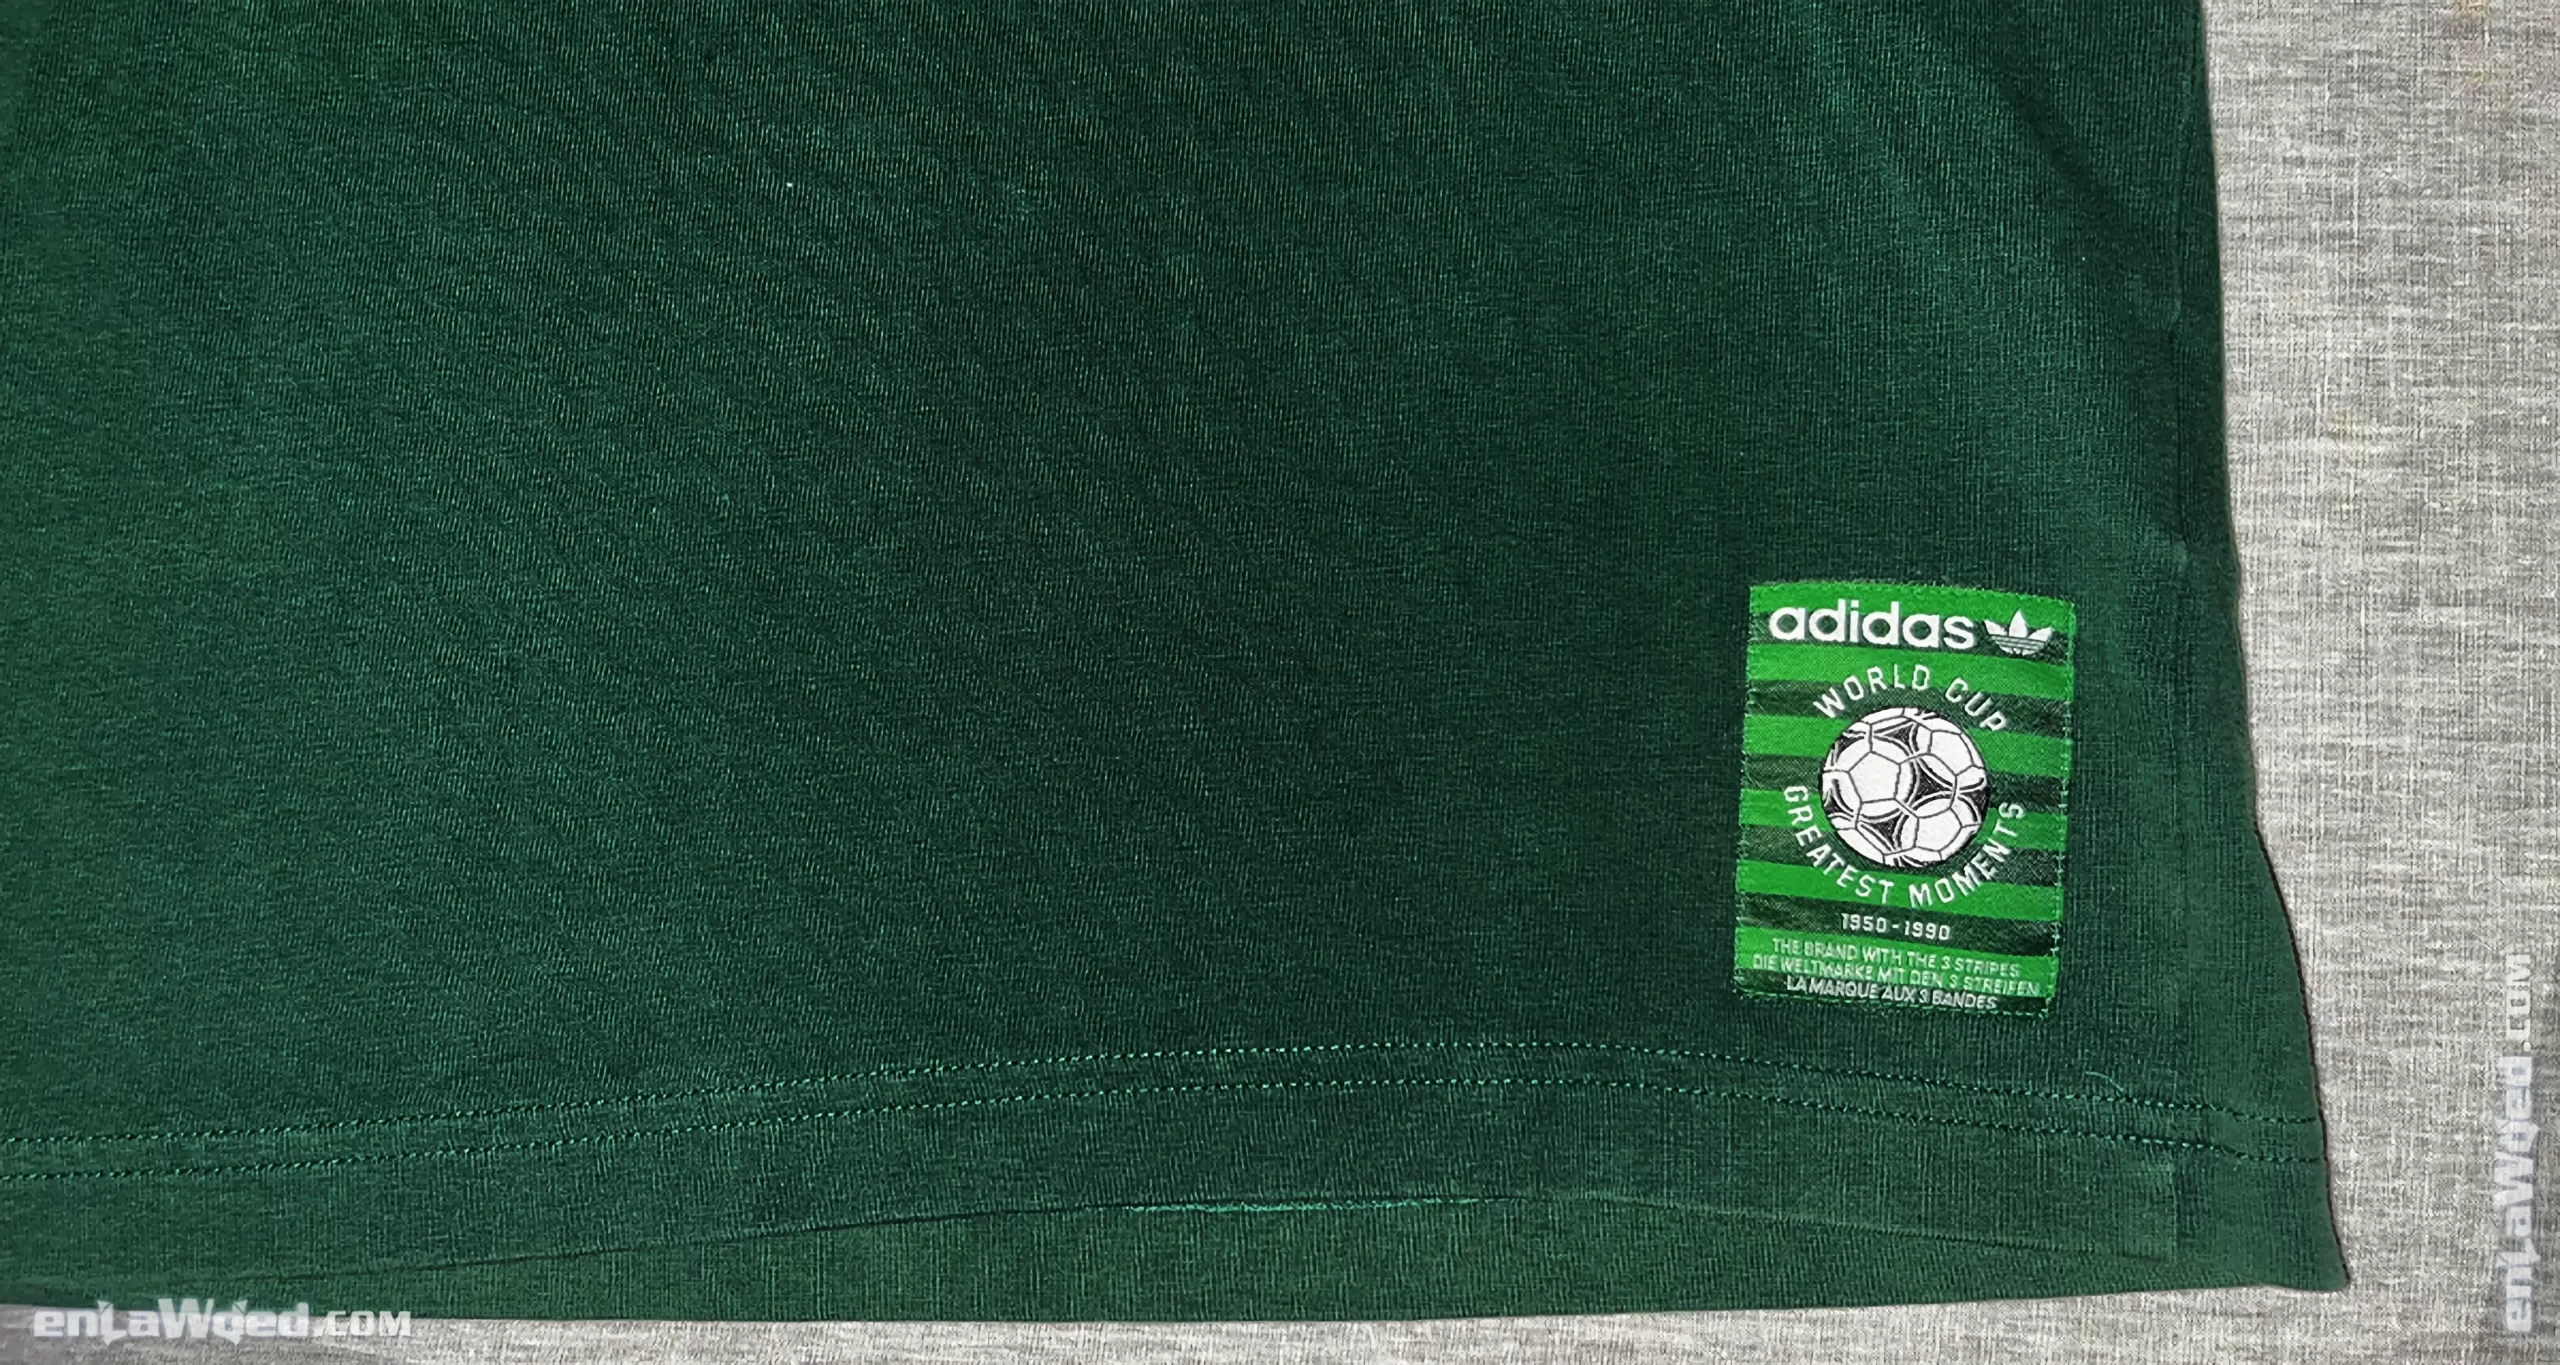 Men’s 2006 Brasil ’70 Green T-Shirt by Adidas Originals: Direct (EnLawded.com file #lp1mea40126150l9t00pukvm)